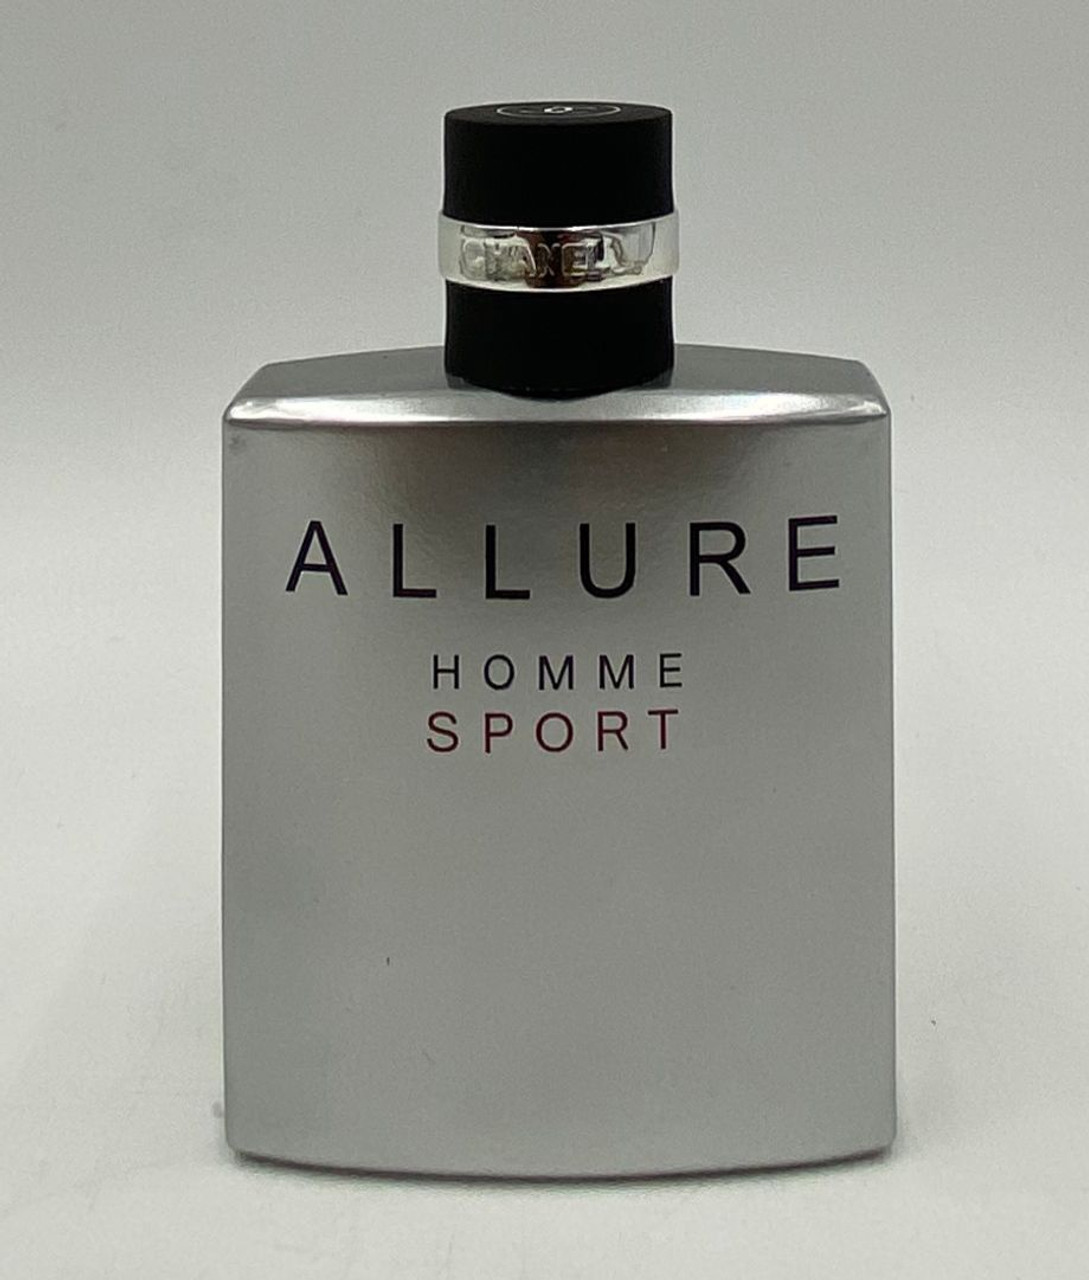 Perfume Allure Homme Sport 3.4fl. oz 100ml (Generic) - A. Ally & Sons